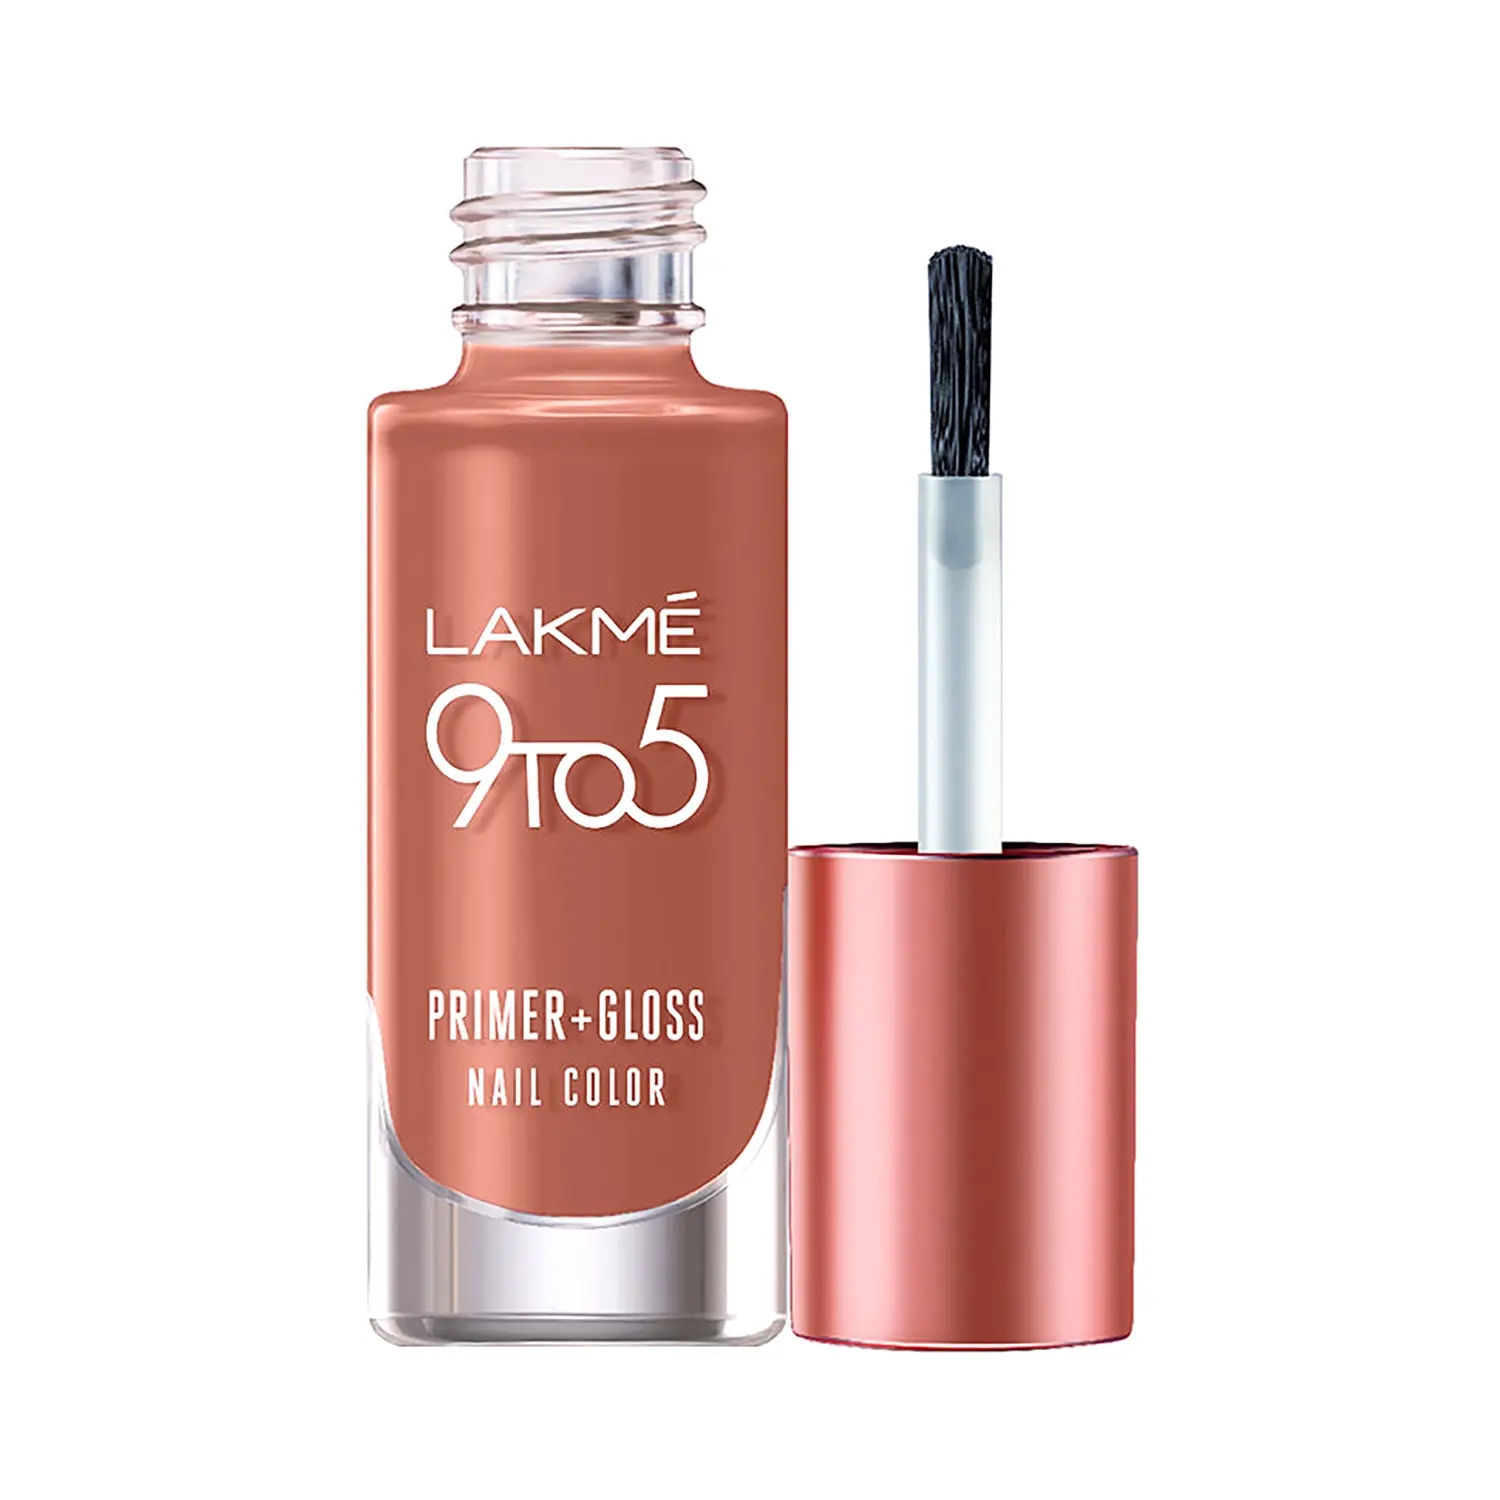 Lakme | Lakme 9To5 Primer + Gloss Nail Color - Honey Love 6ml